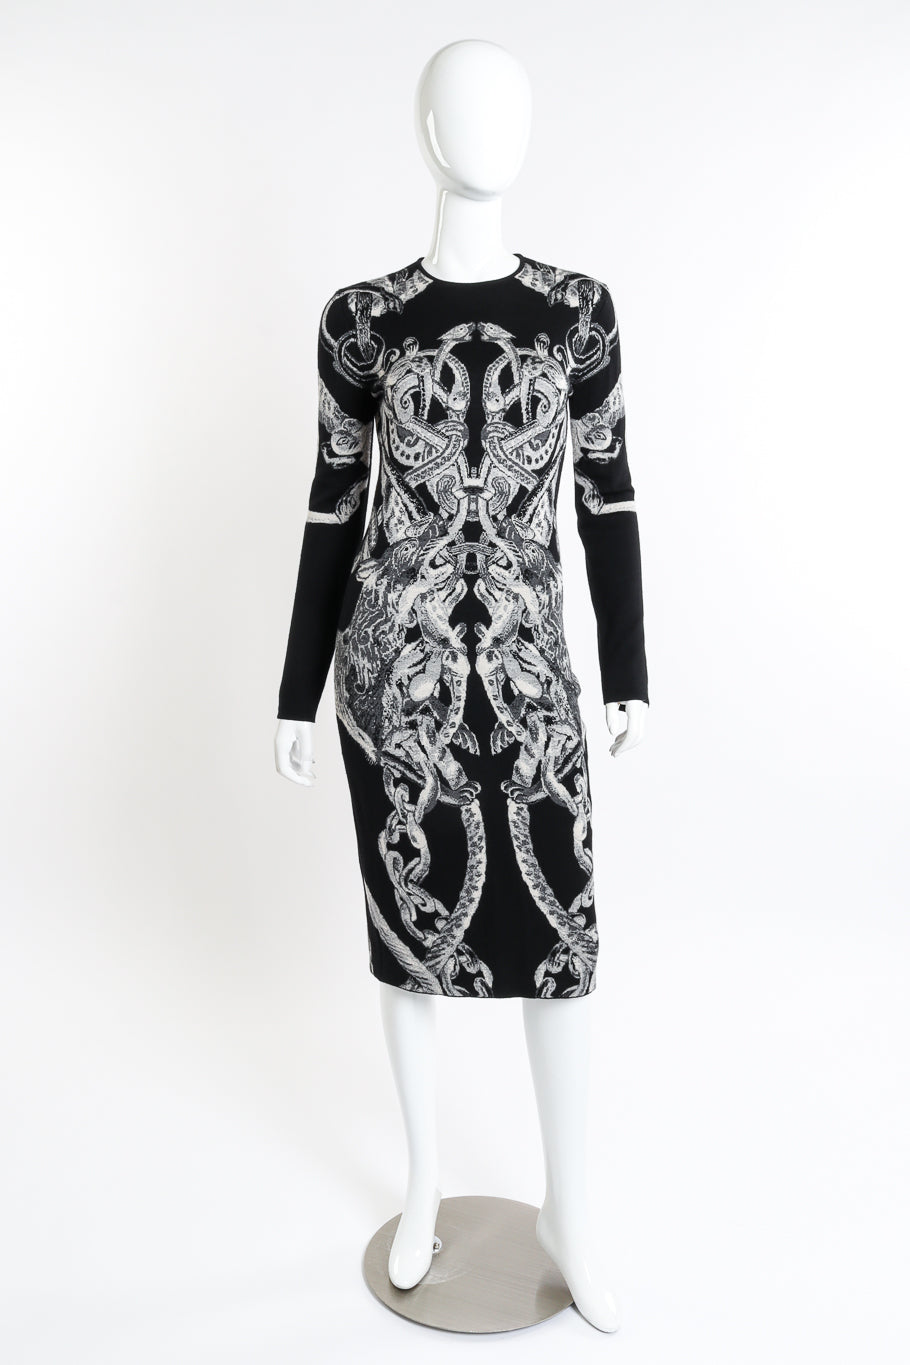 Alexander McQueen 2010 A/W Graphic Knit Dress front on mannequin @recessla